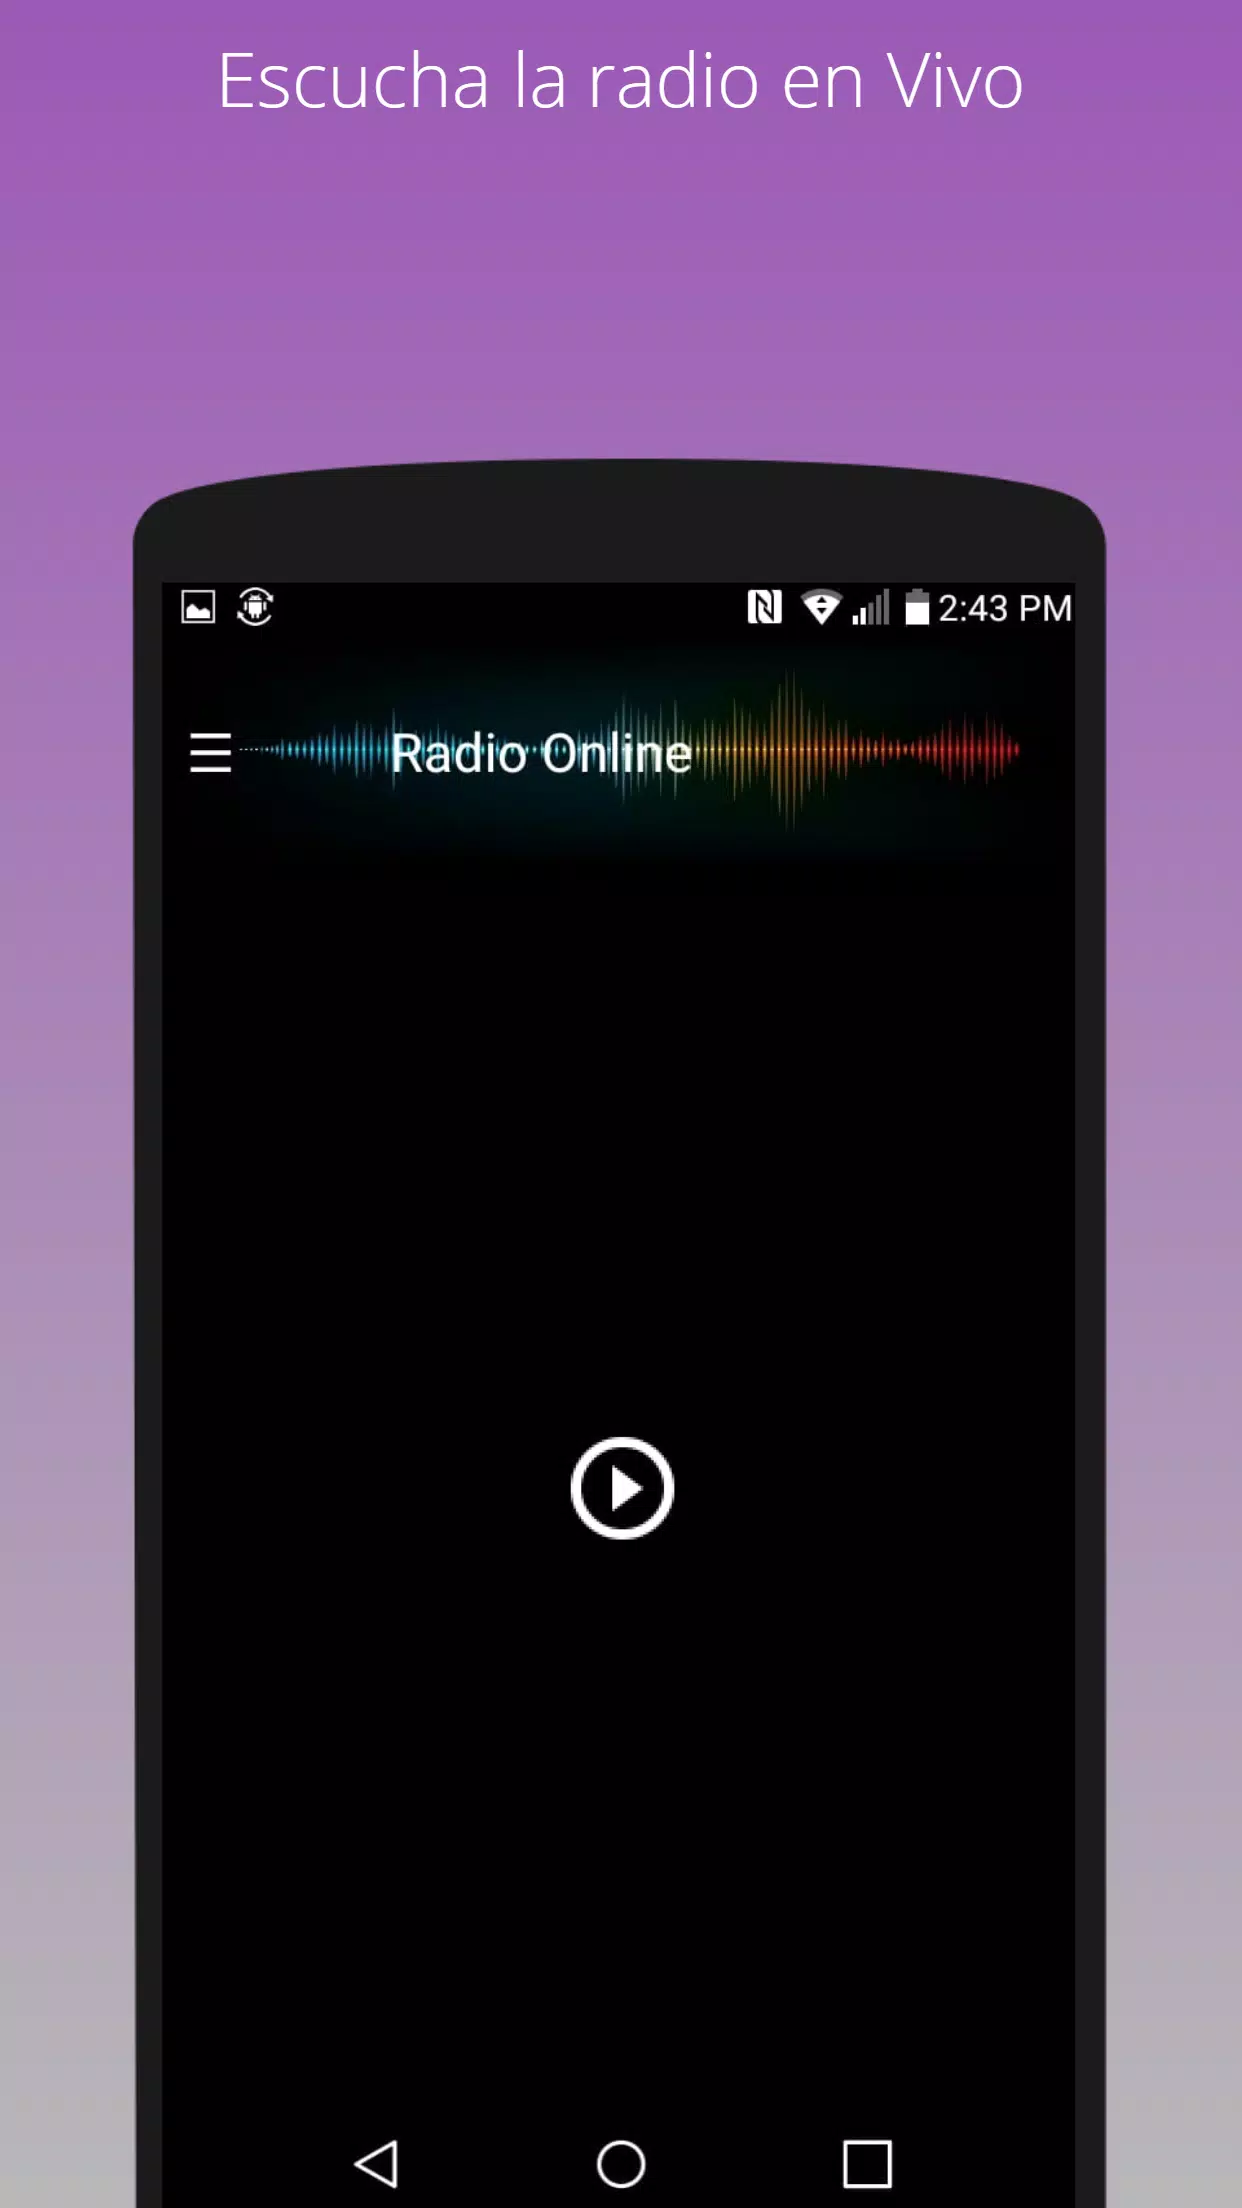 Radio Maria 89.3 FM en vivo emisora chilena APK for Android Download